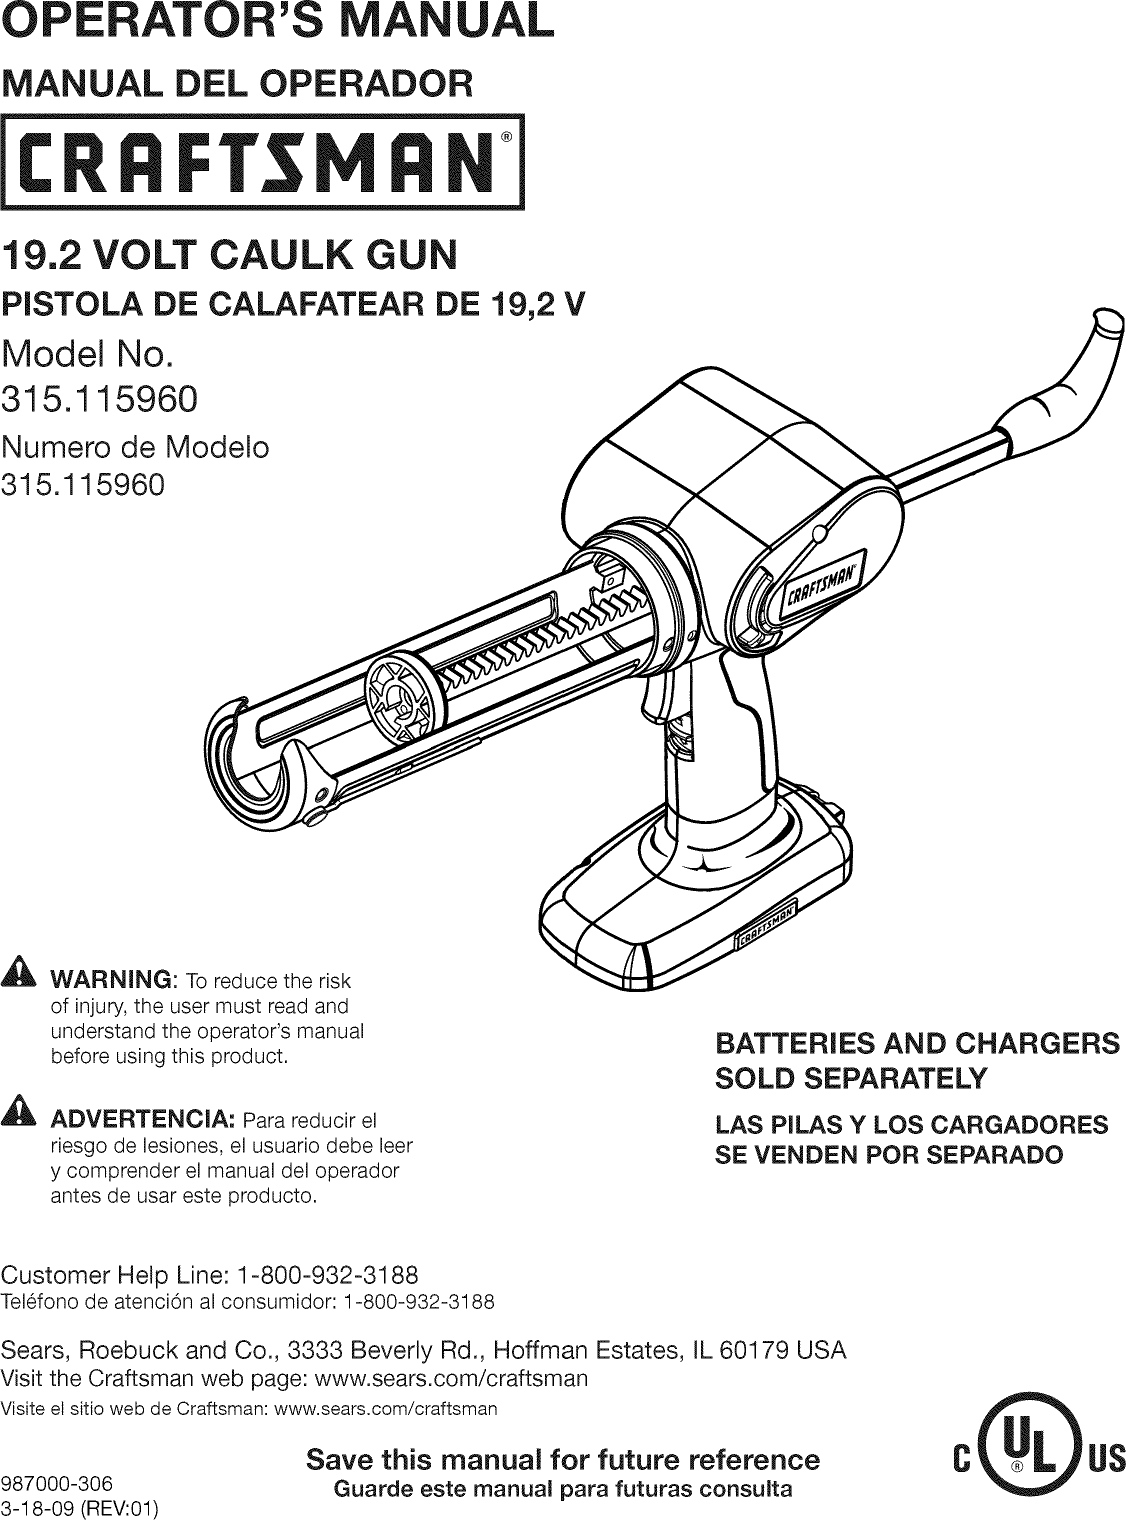 Craftsman 315115960 User Manual CAULK GUN Manuals And Guides L0911339